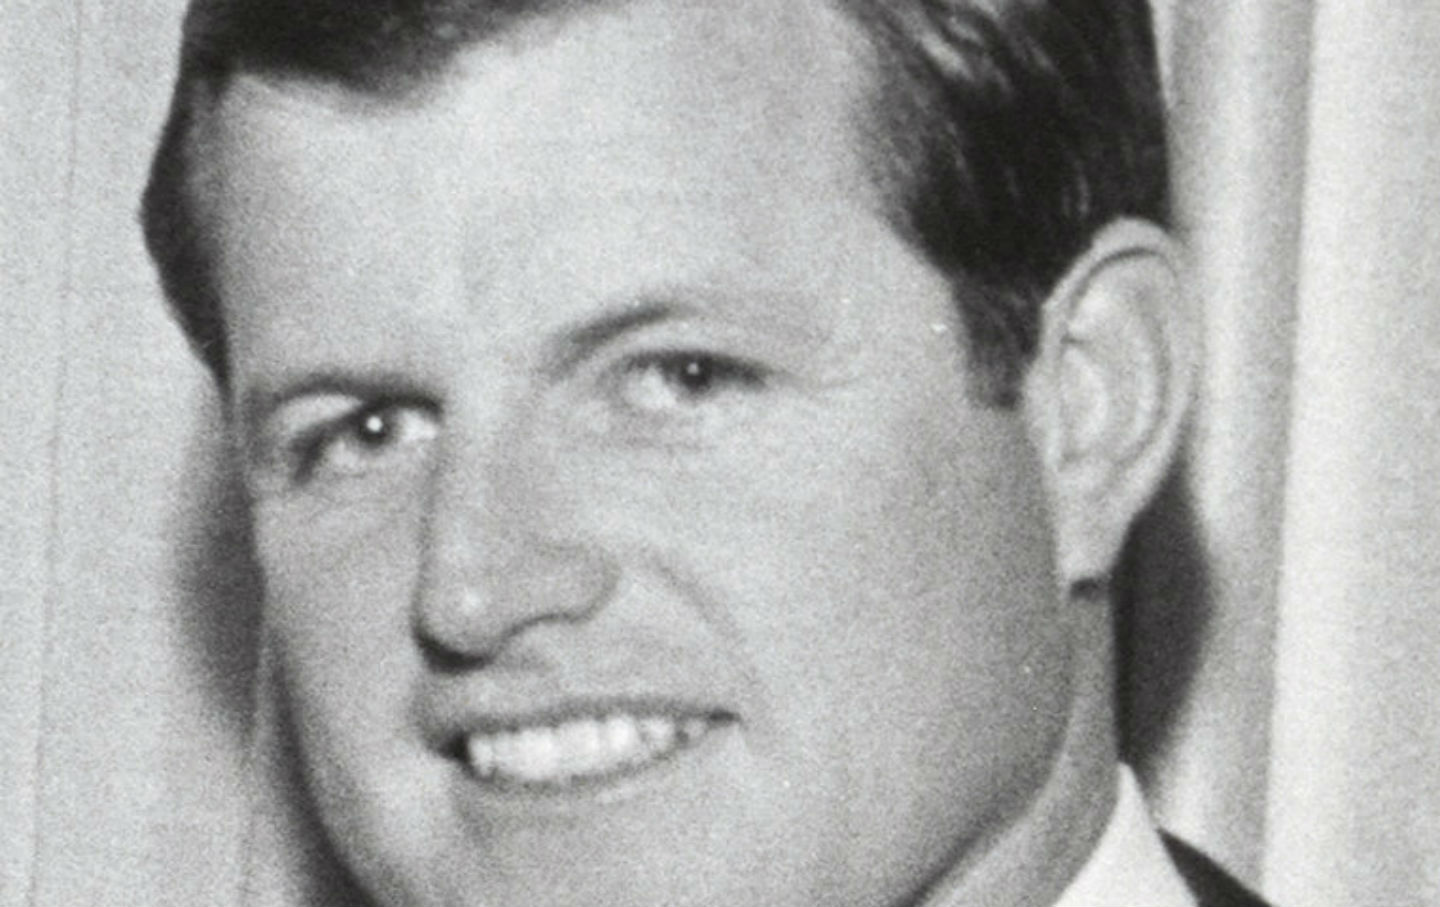 August 25, 2009: Ted Kennedy Dies